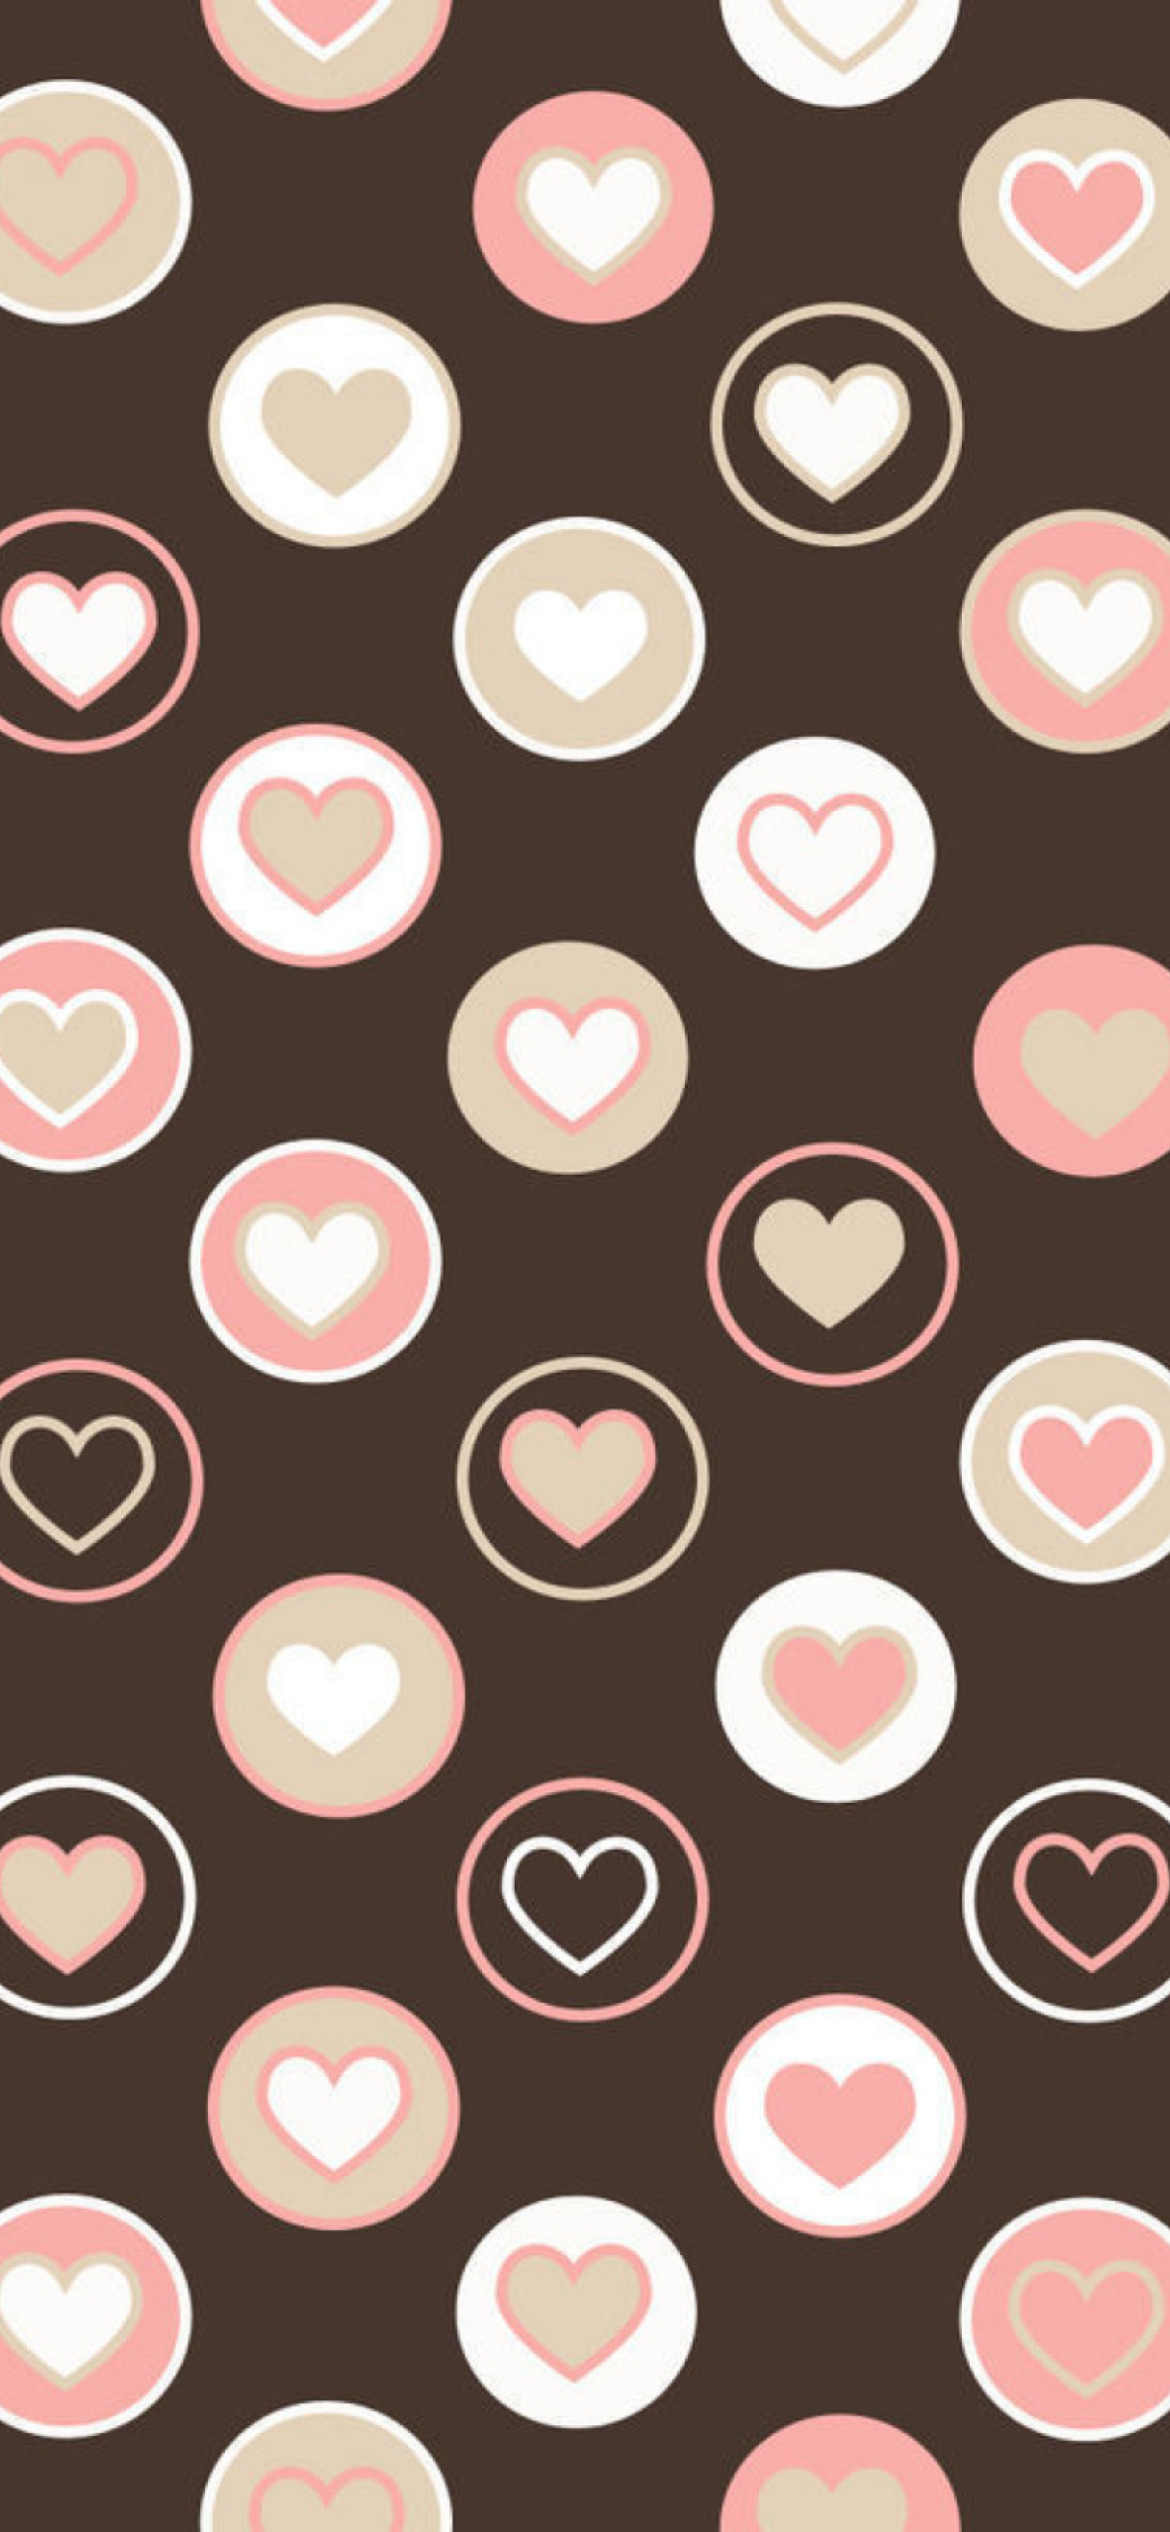 Das Pink Hearts Wallpaper 1170x2532